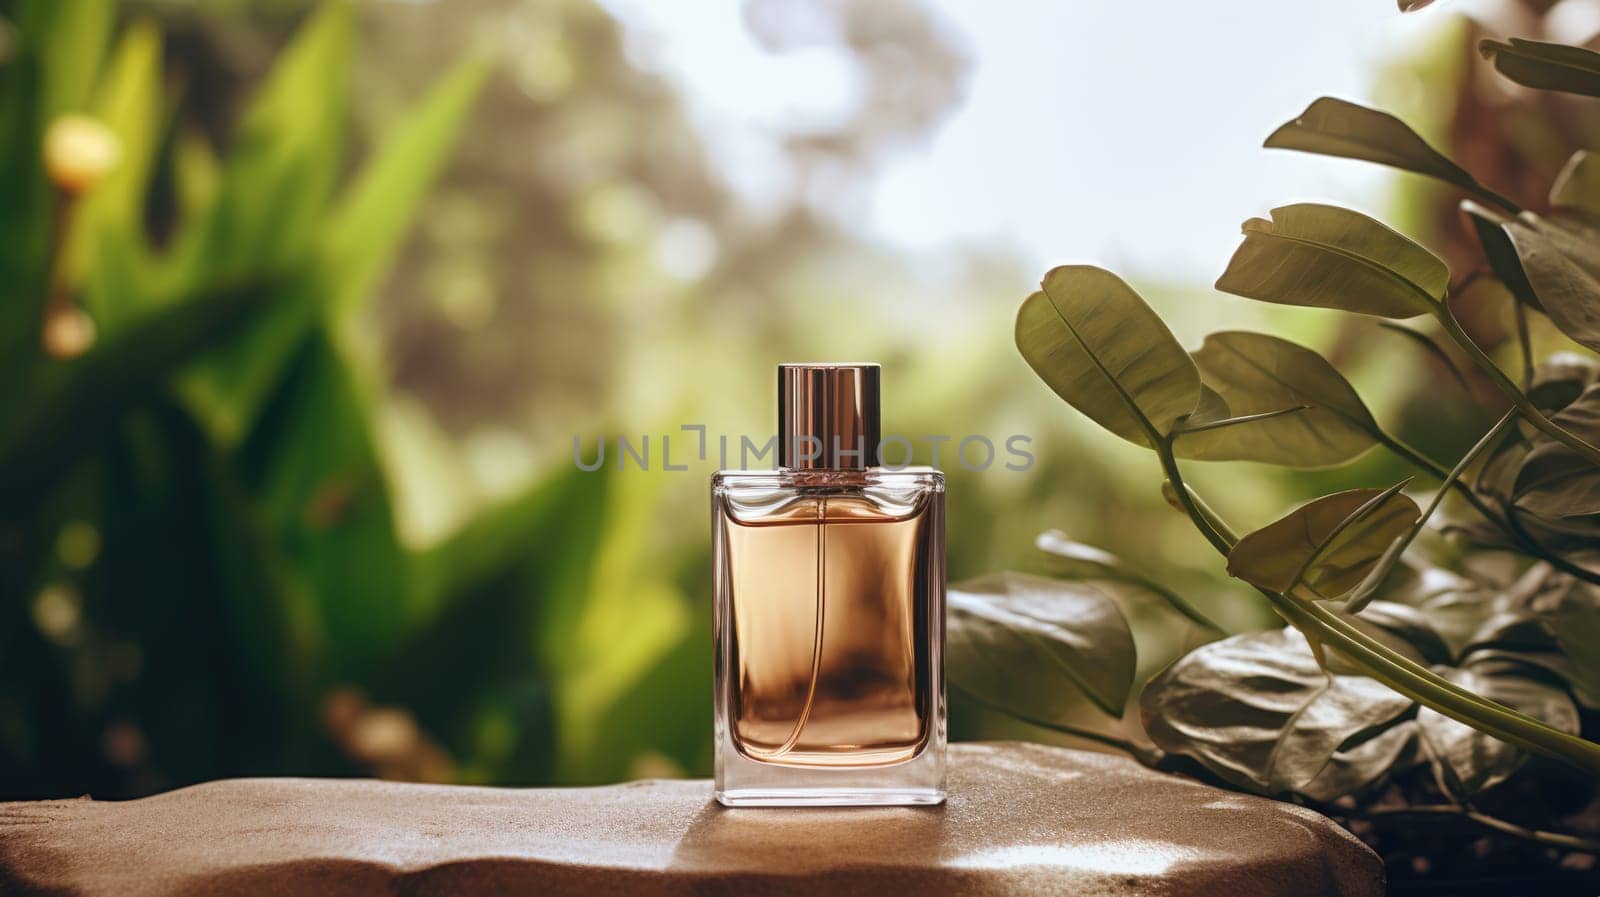 Transparent brown glass perfume bottle mockup with plants on background. Eau de toilette. Mockup, spring flat lay